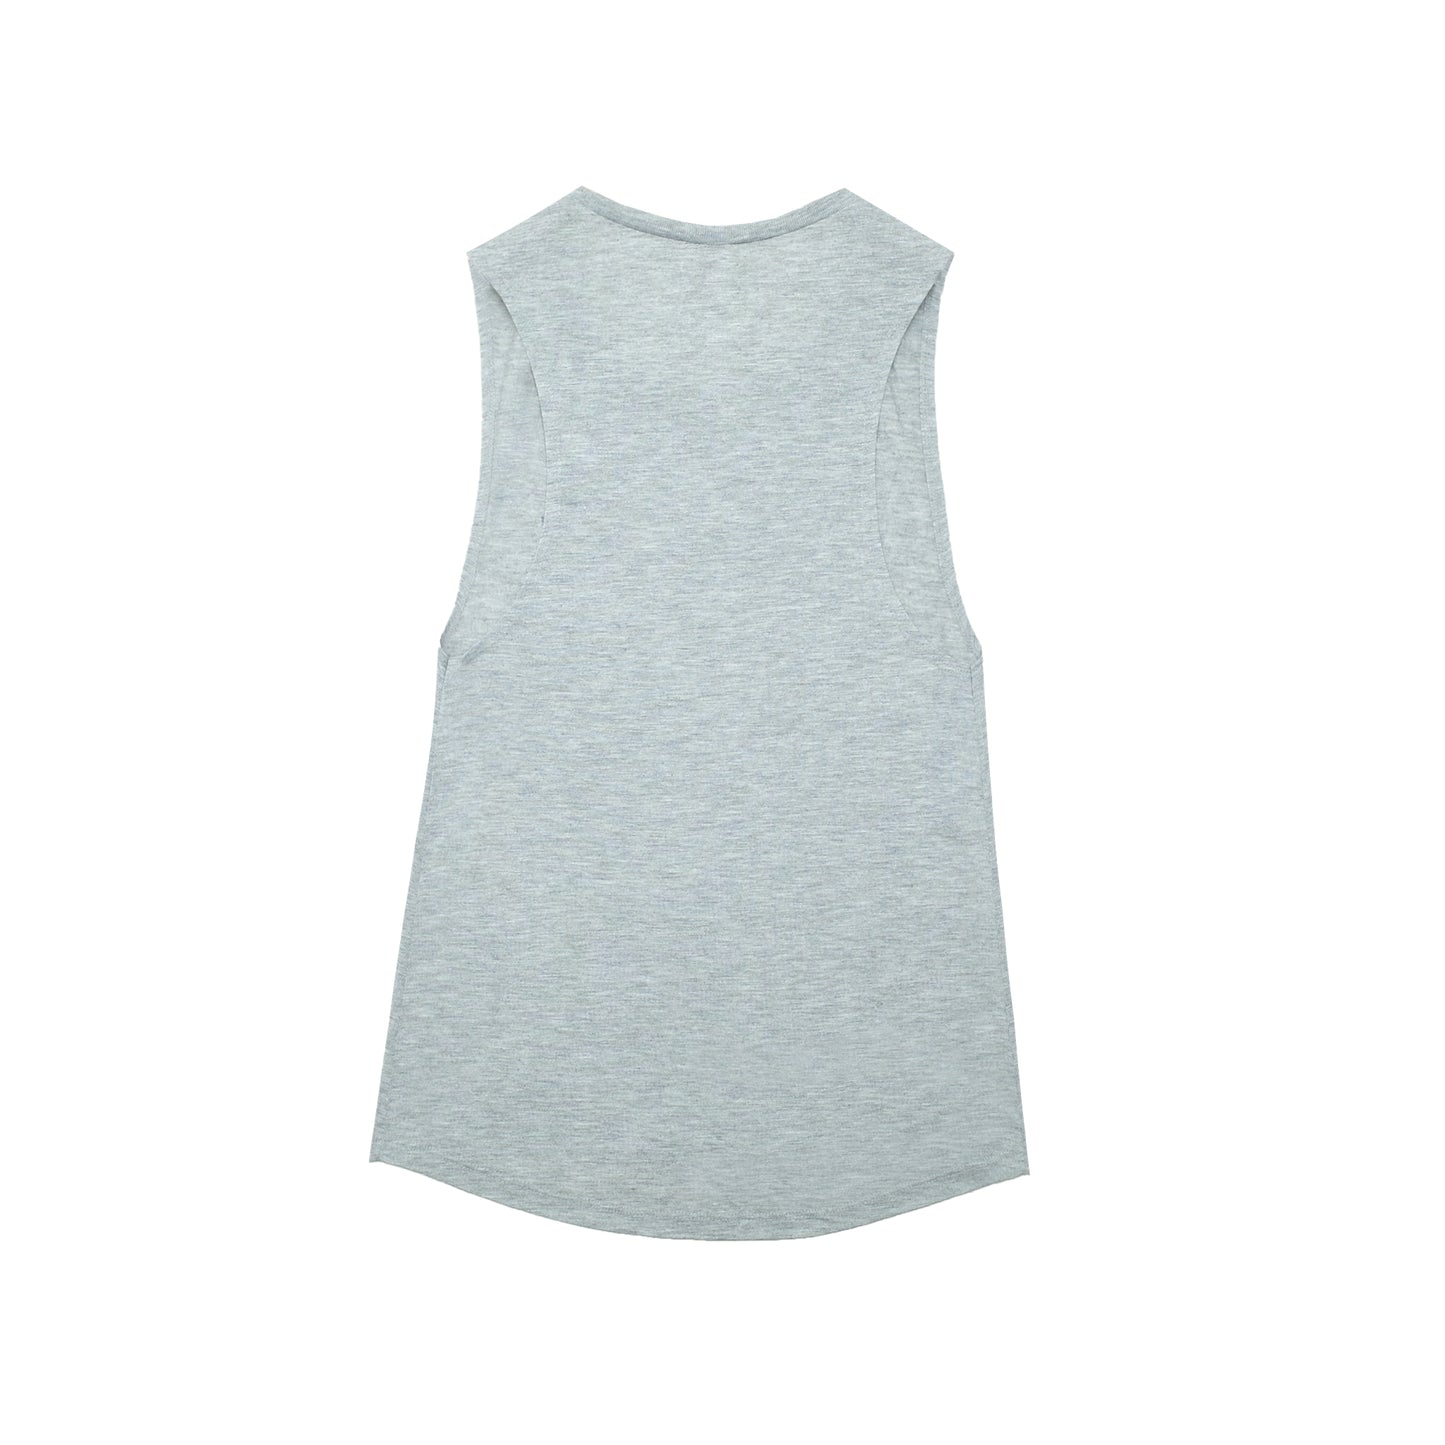 TDE New Classic Woman's Sleeveless T-Shirt